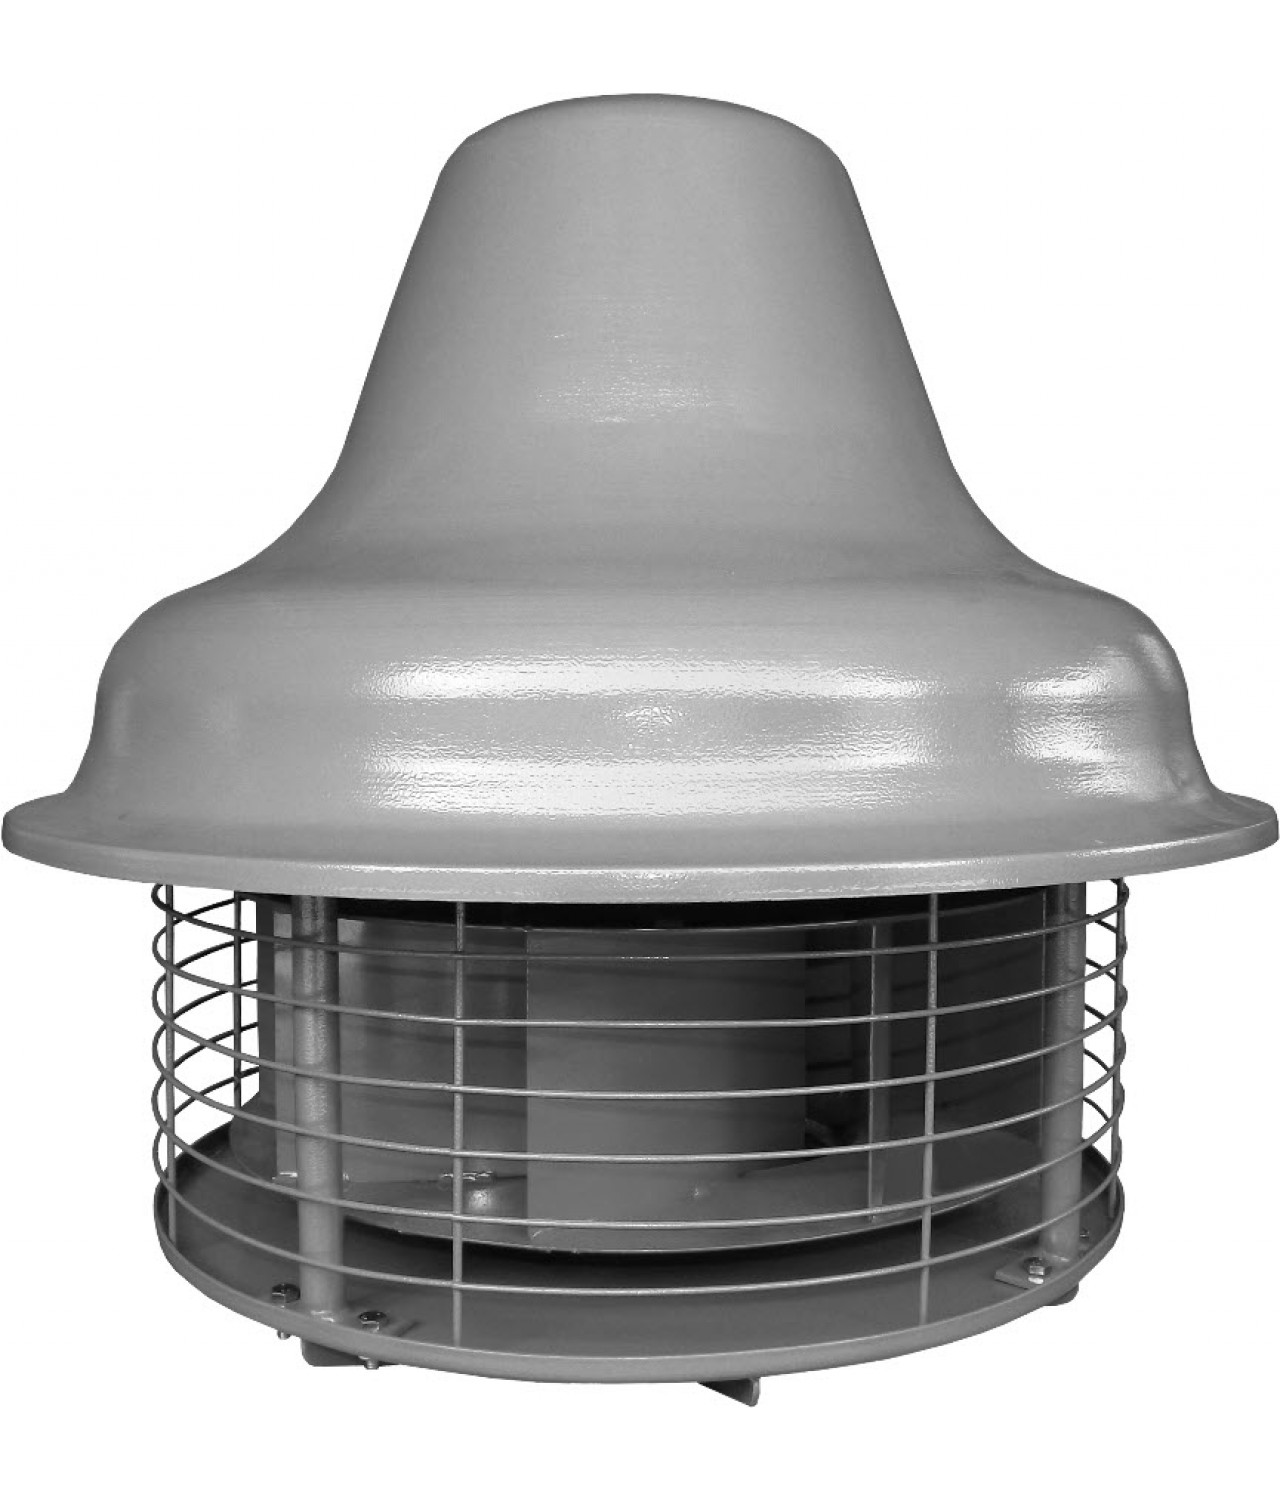 Centrifugal roof fans SVPFD ≤20520 m³/h